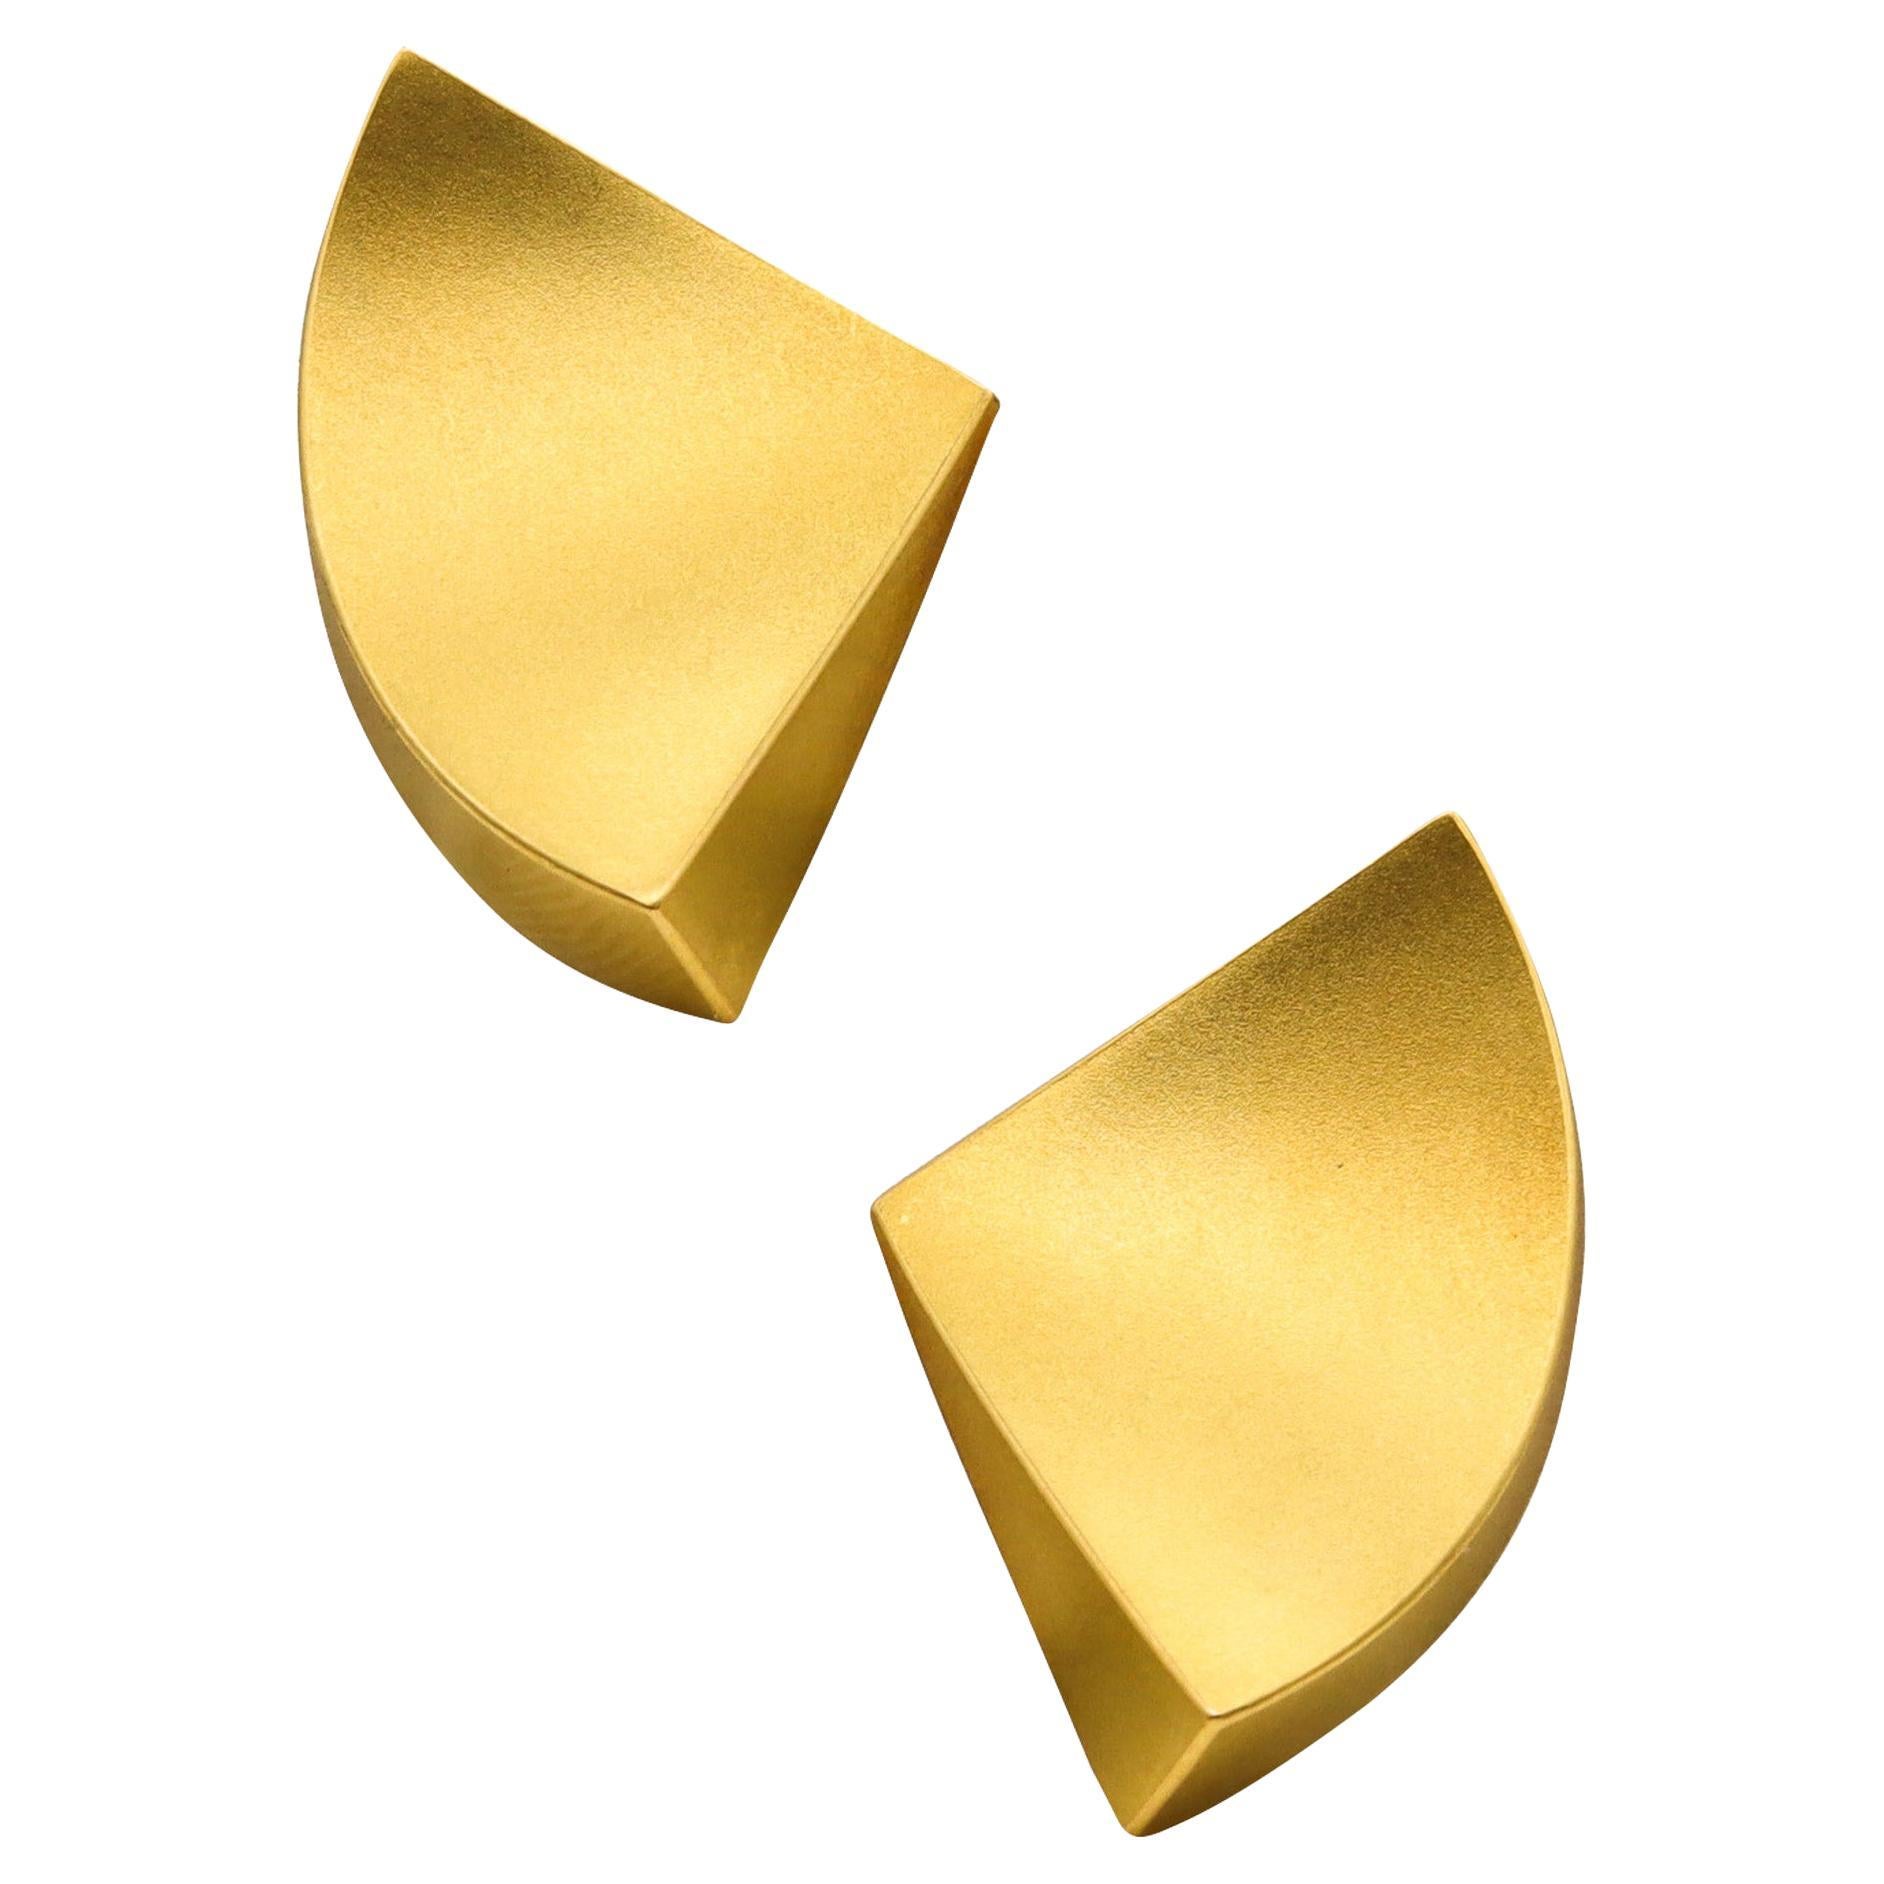 German Designer Bauhaus Geometric Triangular Clips on Earrings in 18kt Gold For Sale